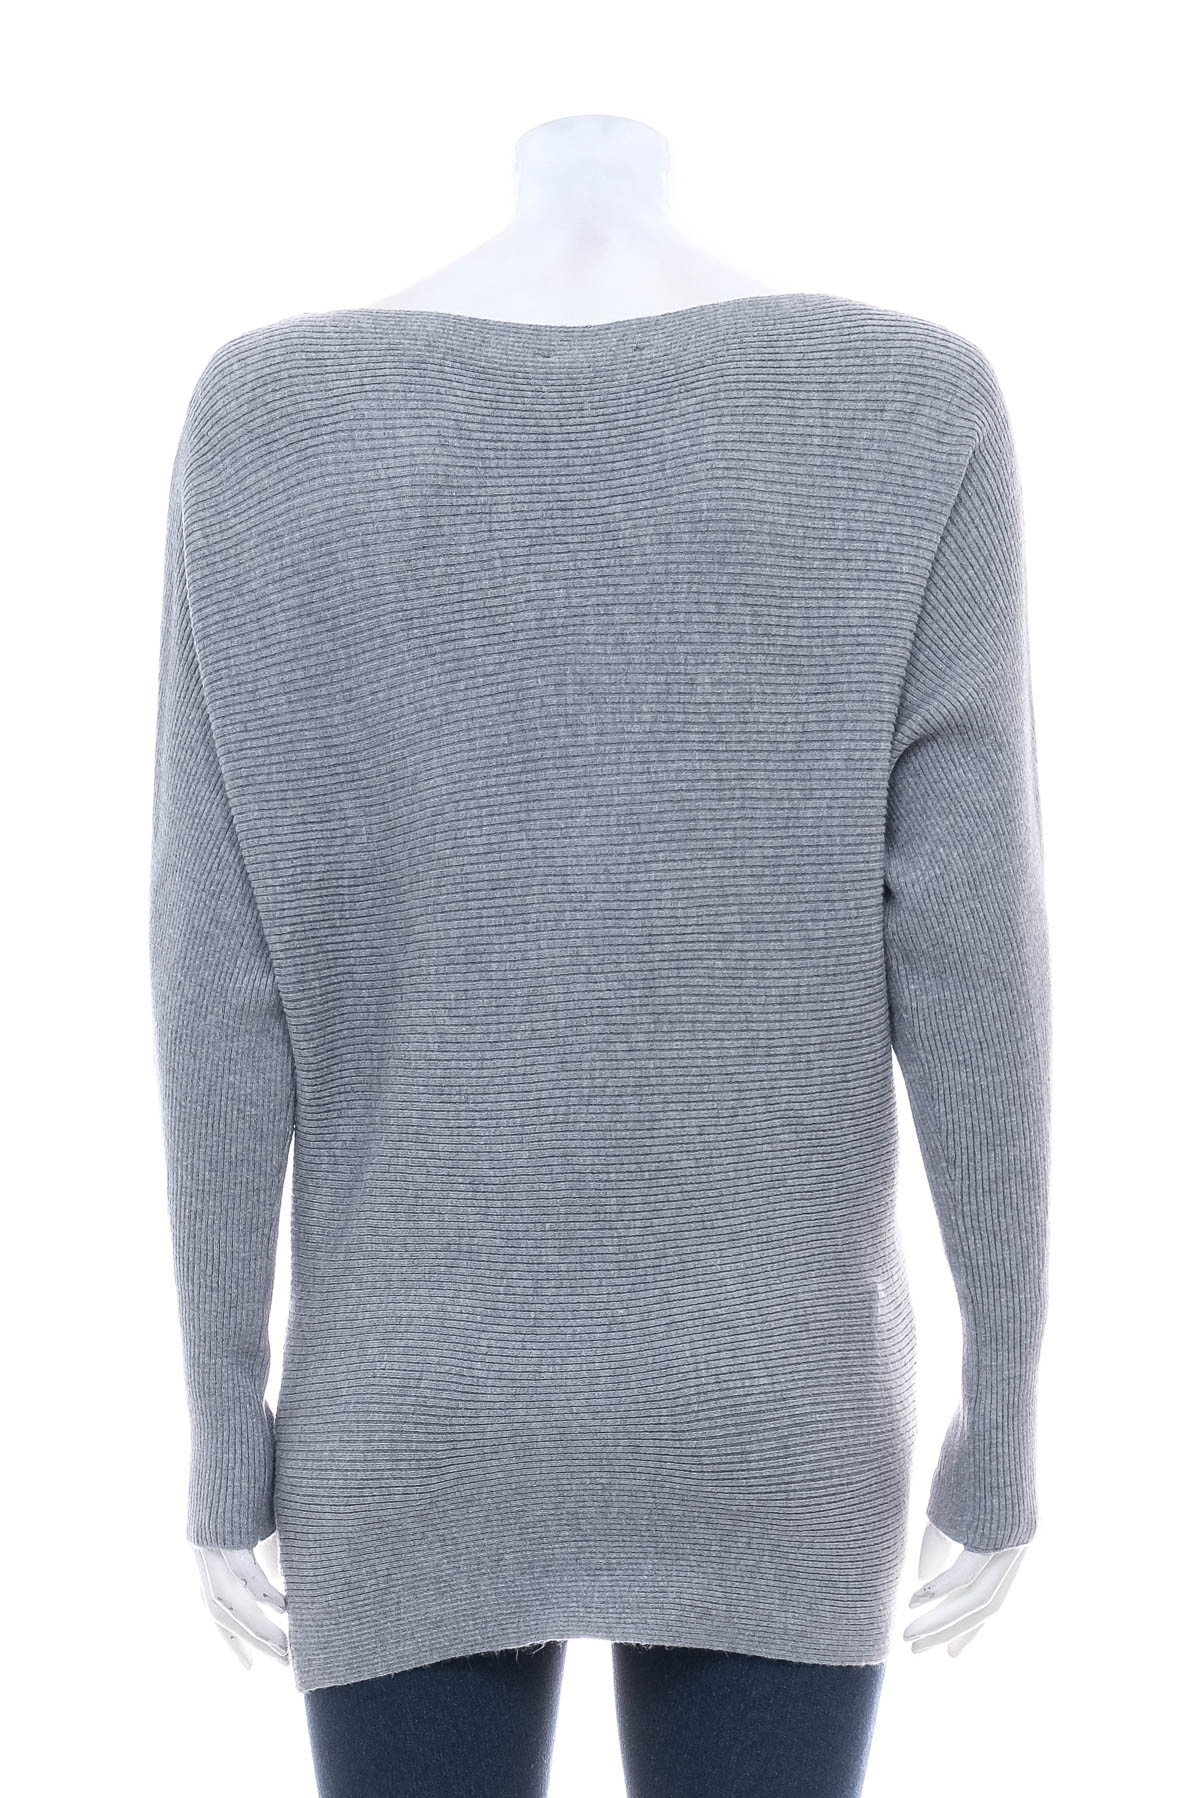 Women's sweater - Belldini - 1